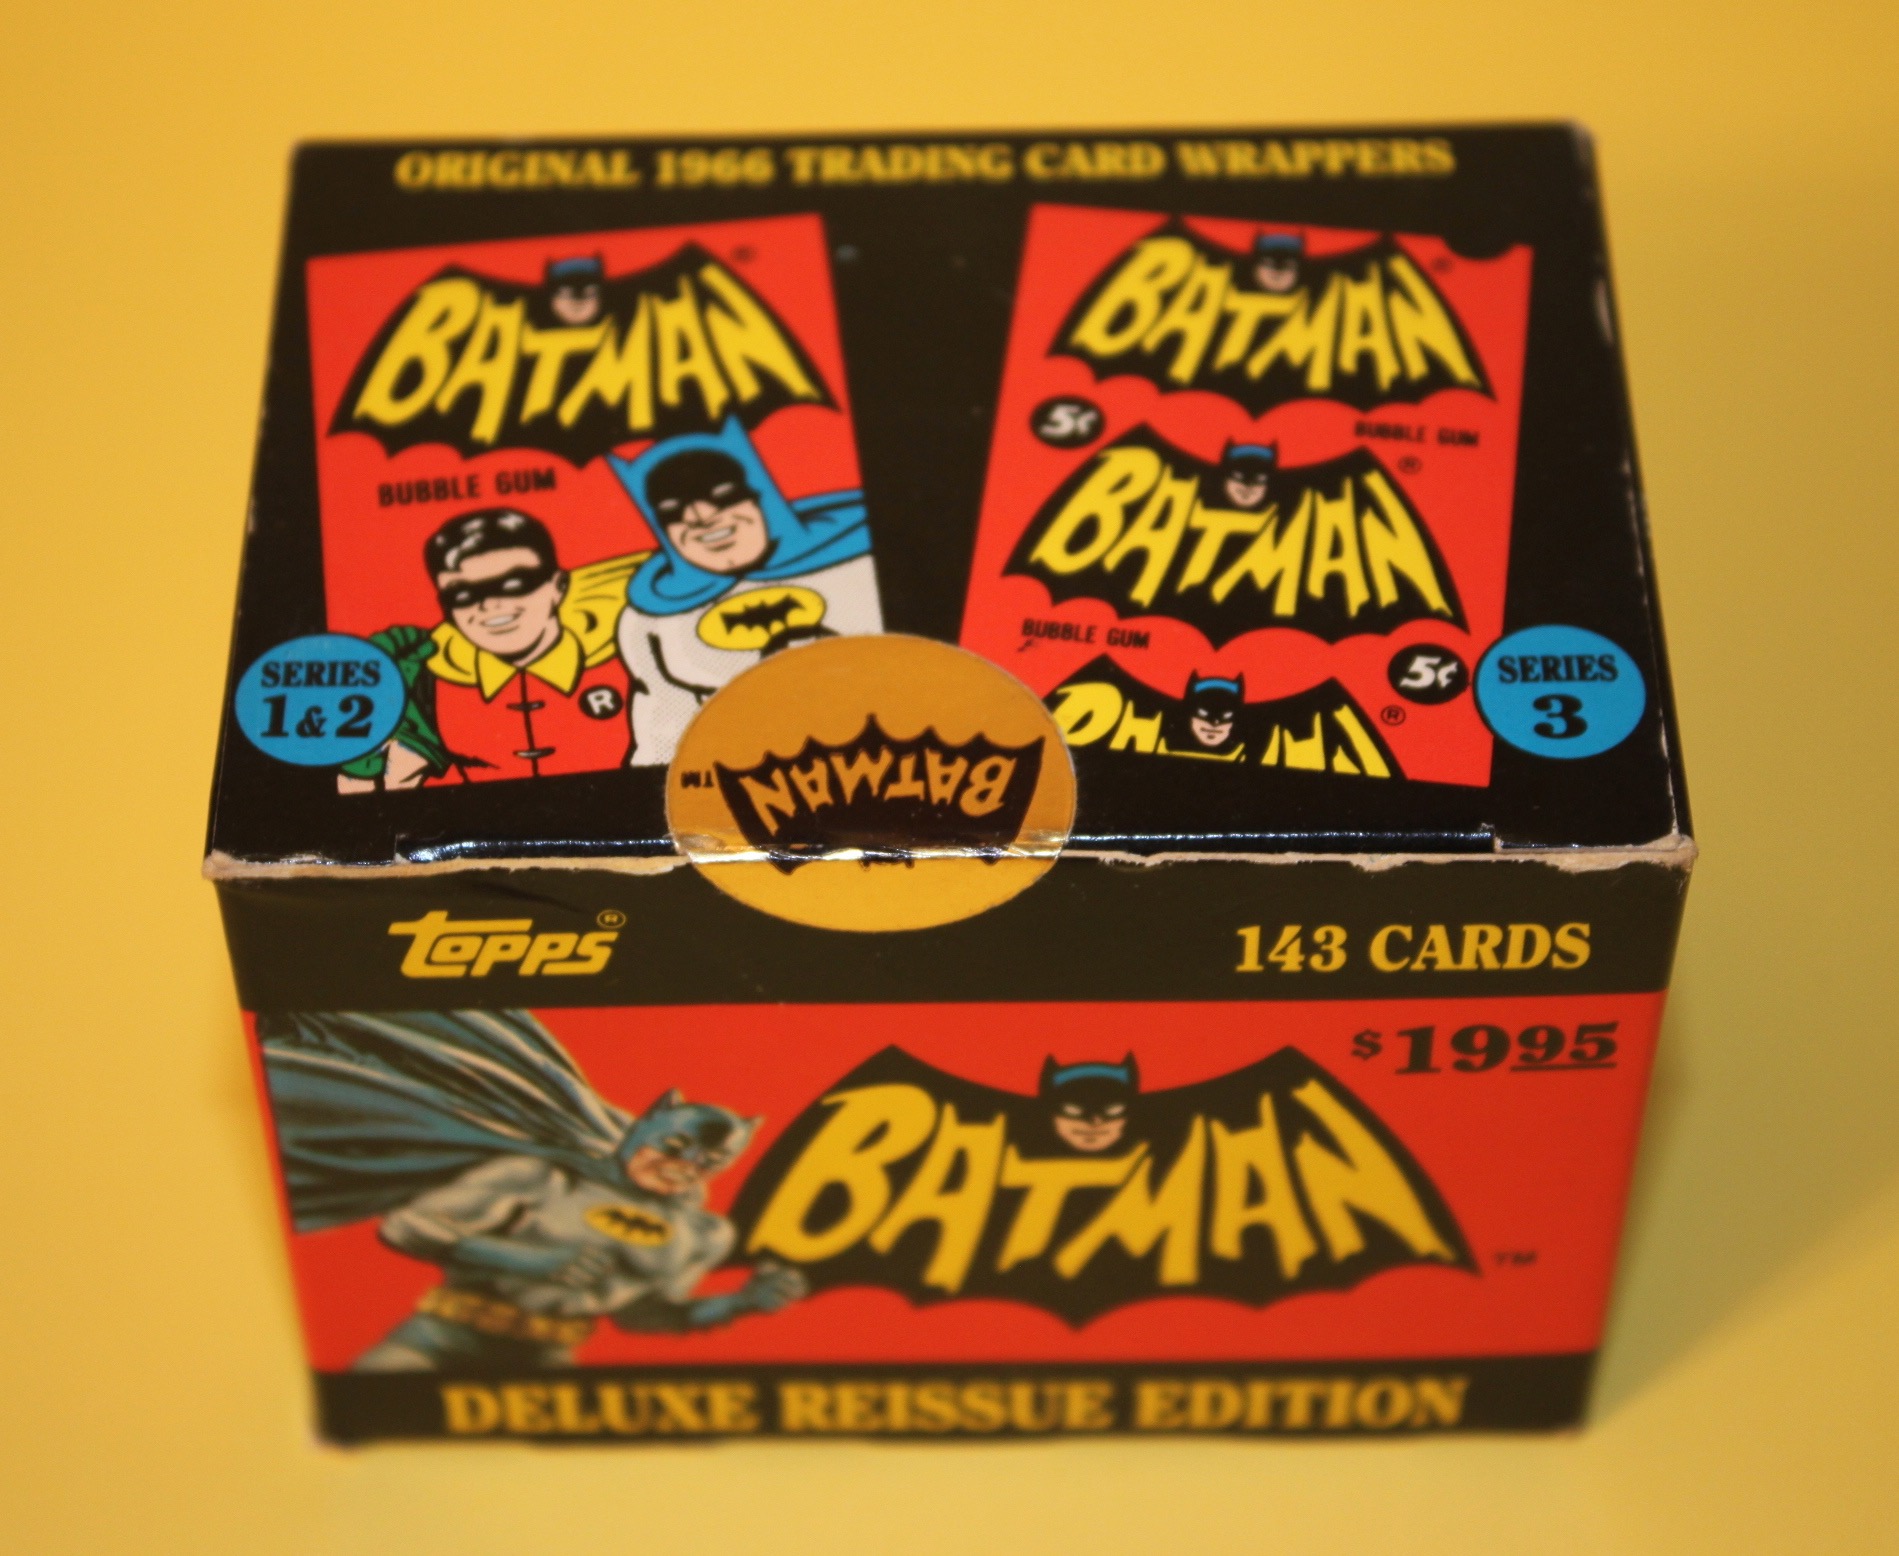 Batman 166 Reissue Trading Cards - Primary